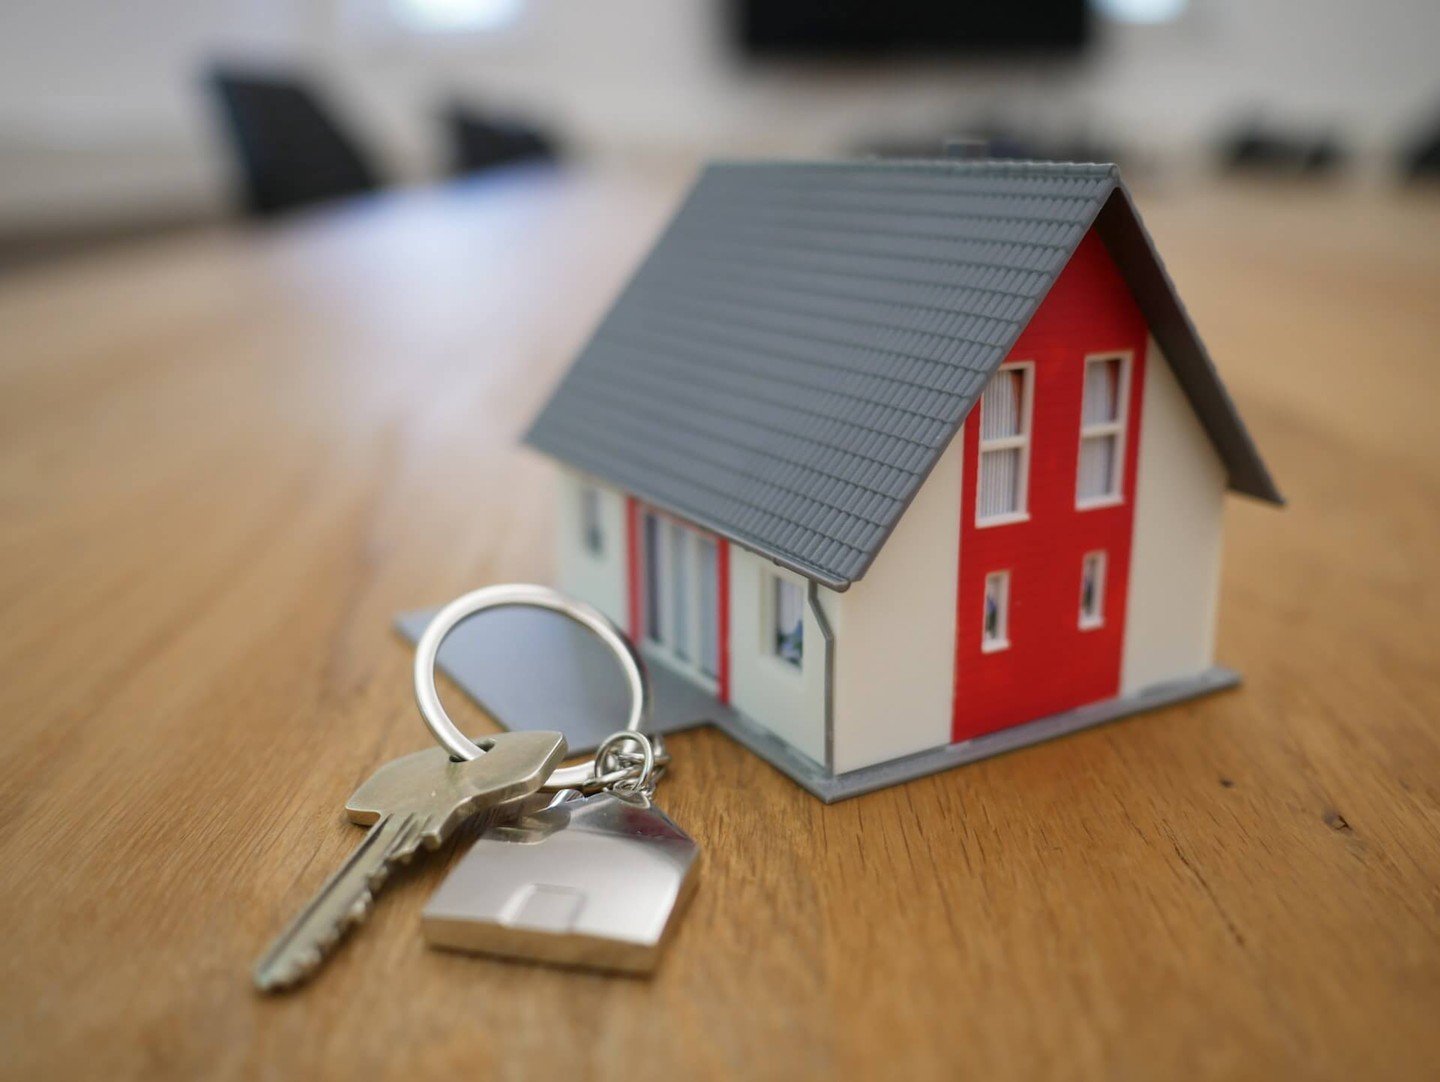 Model house next to house keys